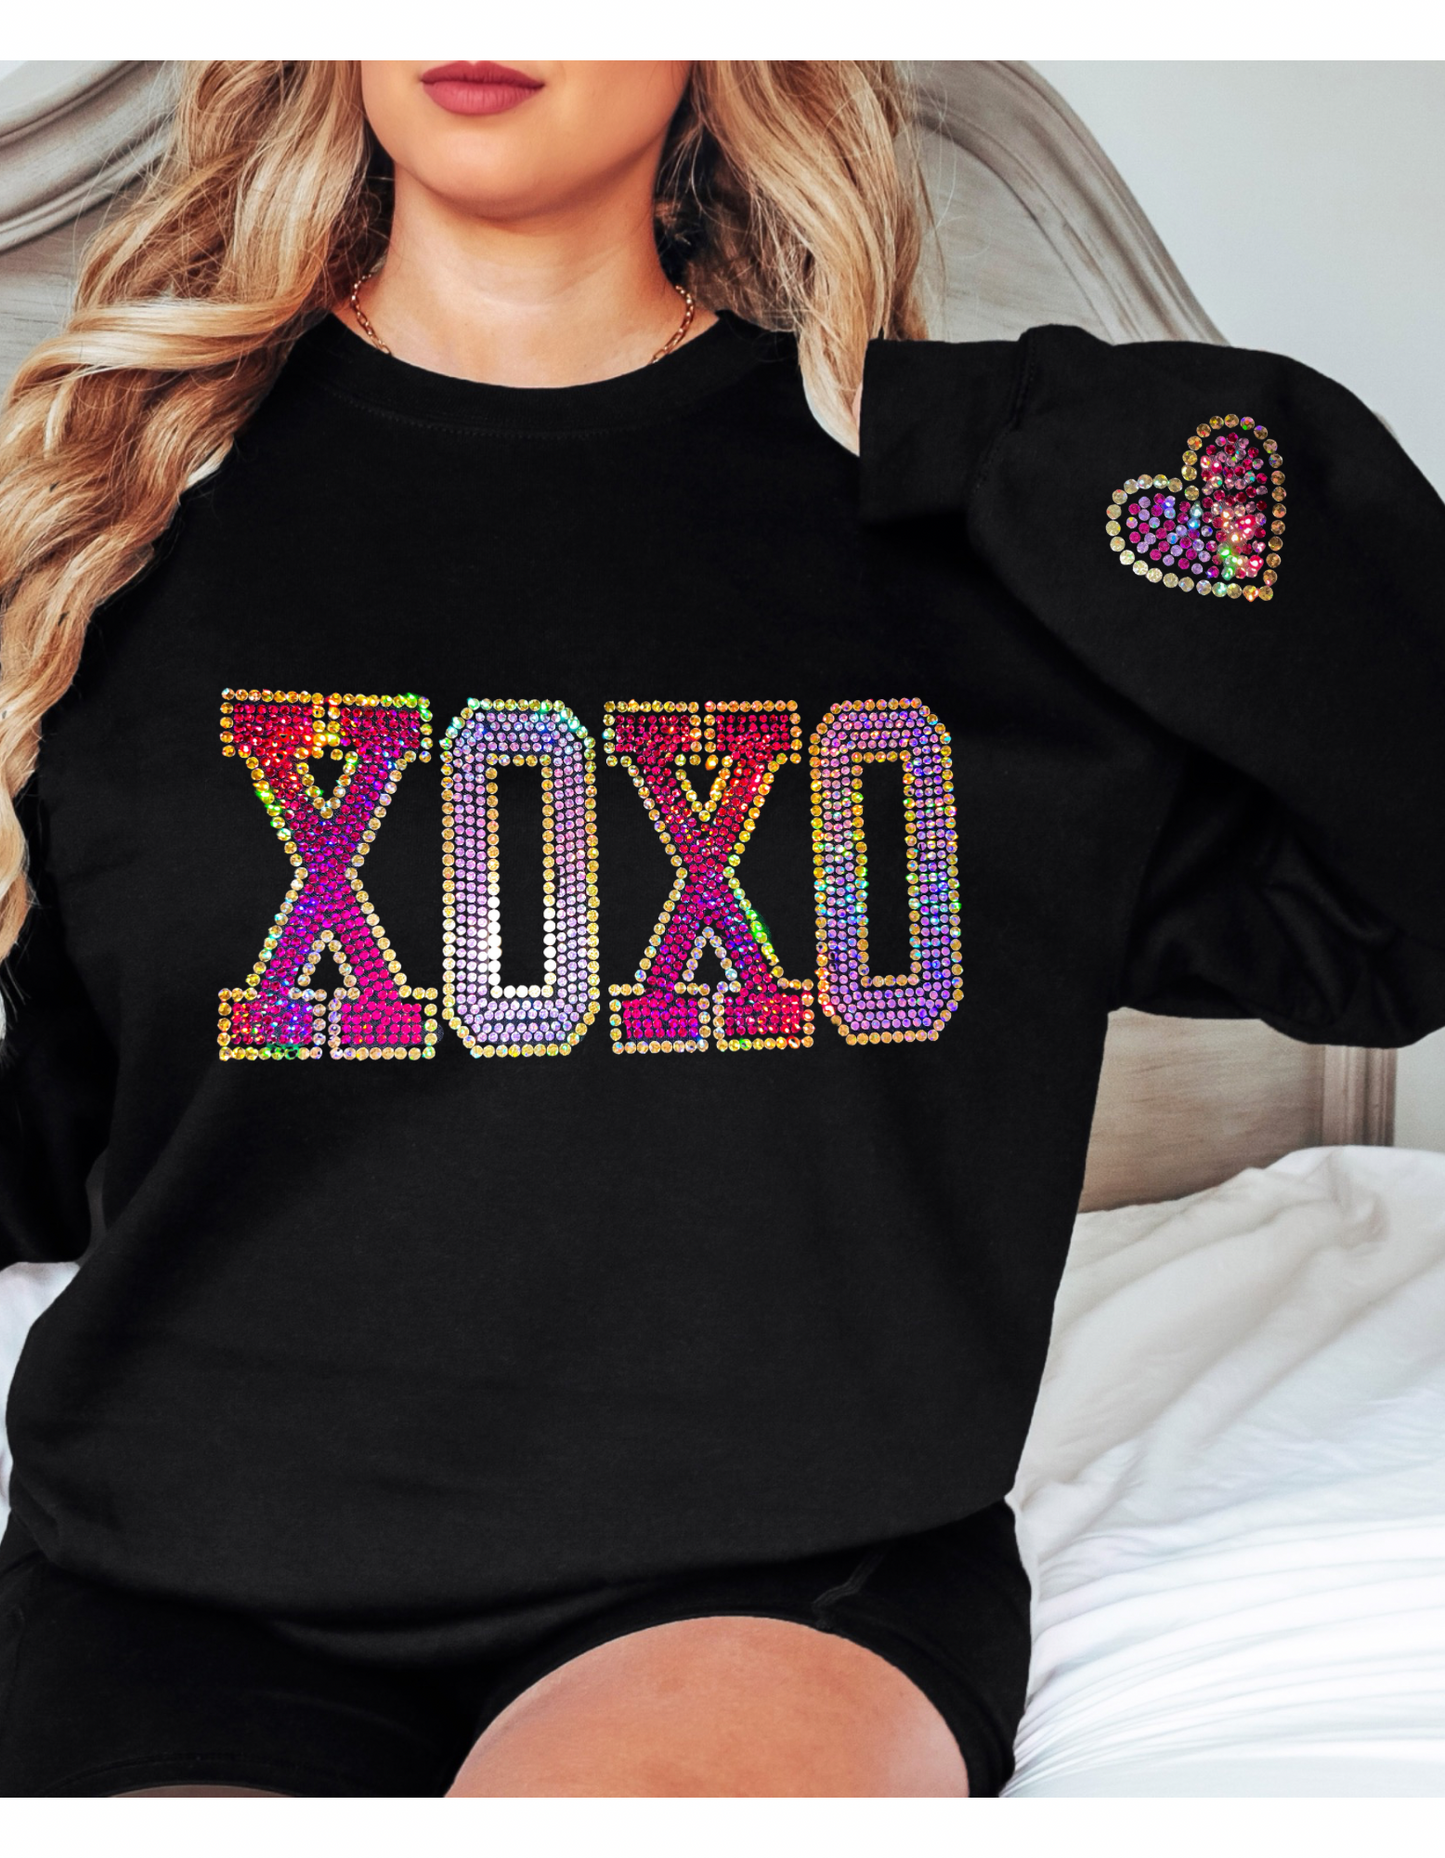 XOXO Bling Valentine’s Day Sweatshirt